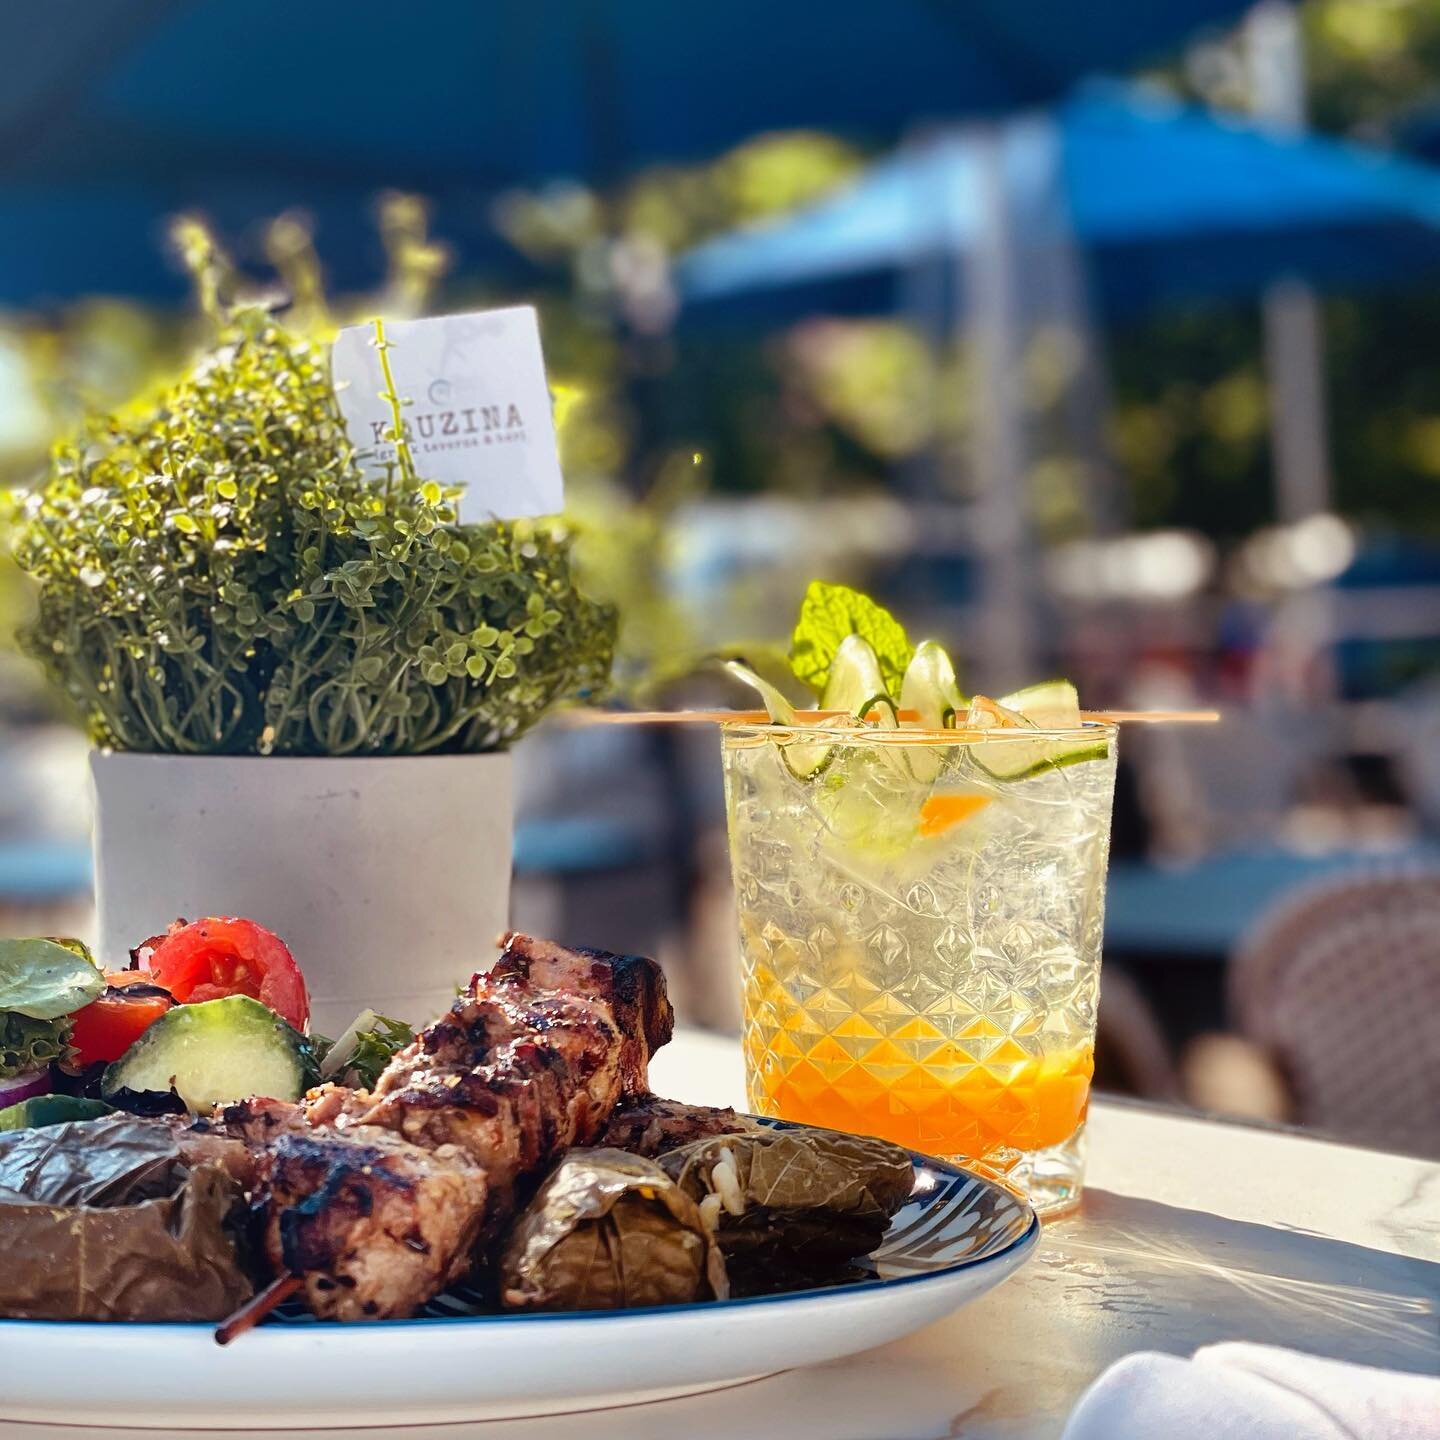 Mykonos Vibes. All day, everyday. 🧿 #stamvegas #stamykonos #stamtorini #mykonos #mykonosmondays #santorini #mykonosmonday #santorinisundays #stamfordct #food #greek #greekfood #greekrestaurant #greekcuisine #greekkitchen #kouzina #taverna #greek #gr